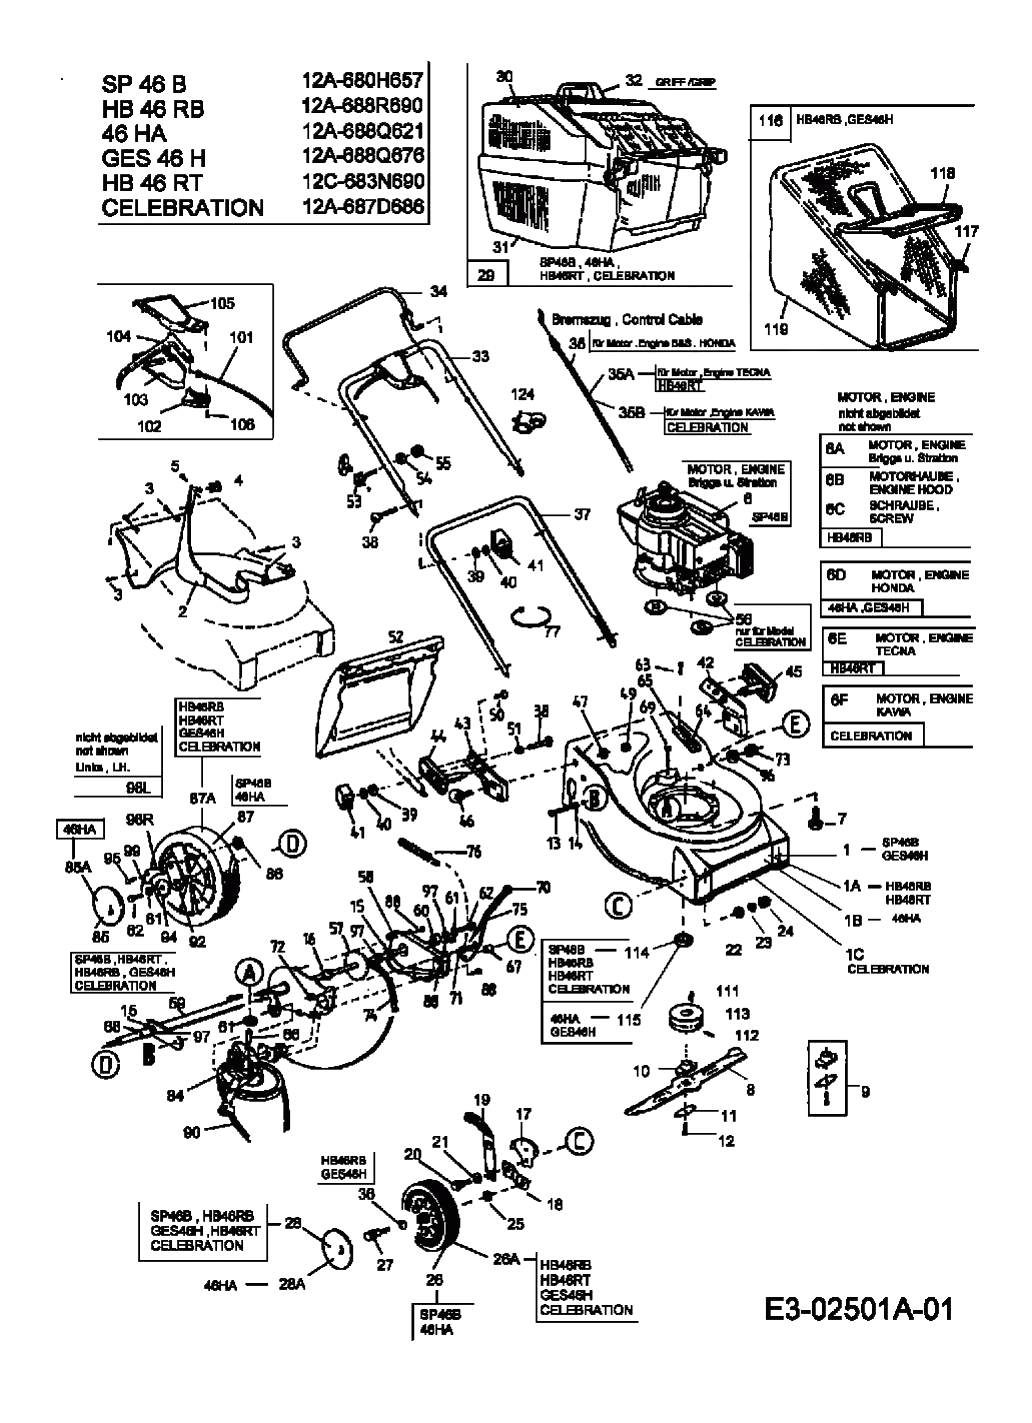 MTD Артикул 12A-688Q676 (год выпуска 2005). Основная деталировка